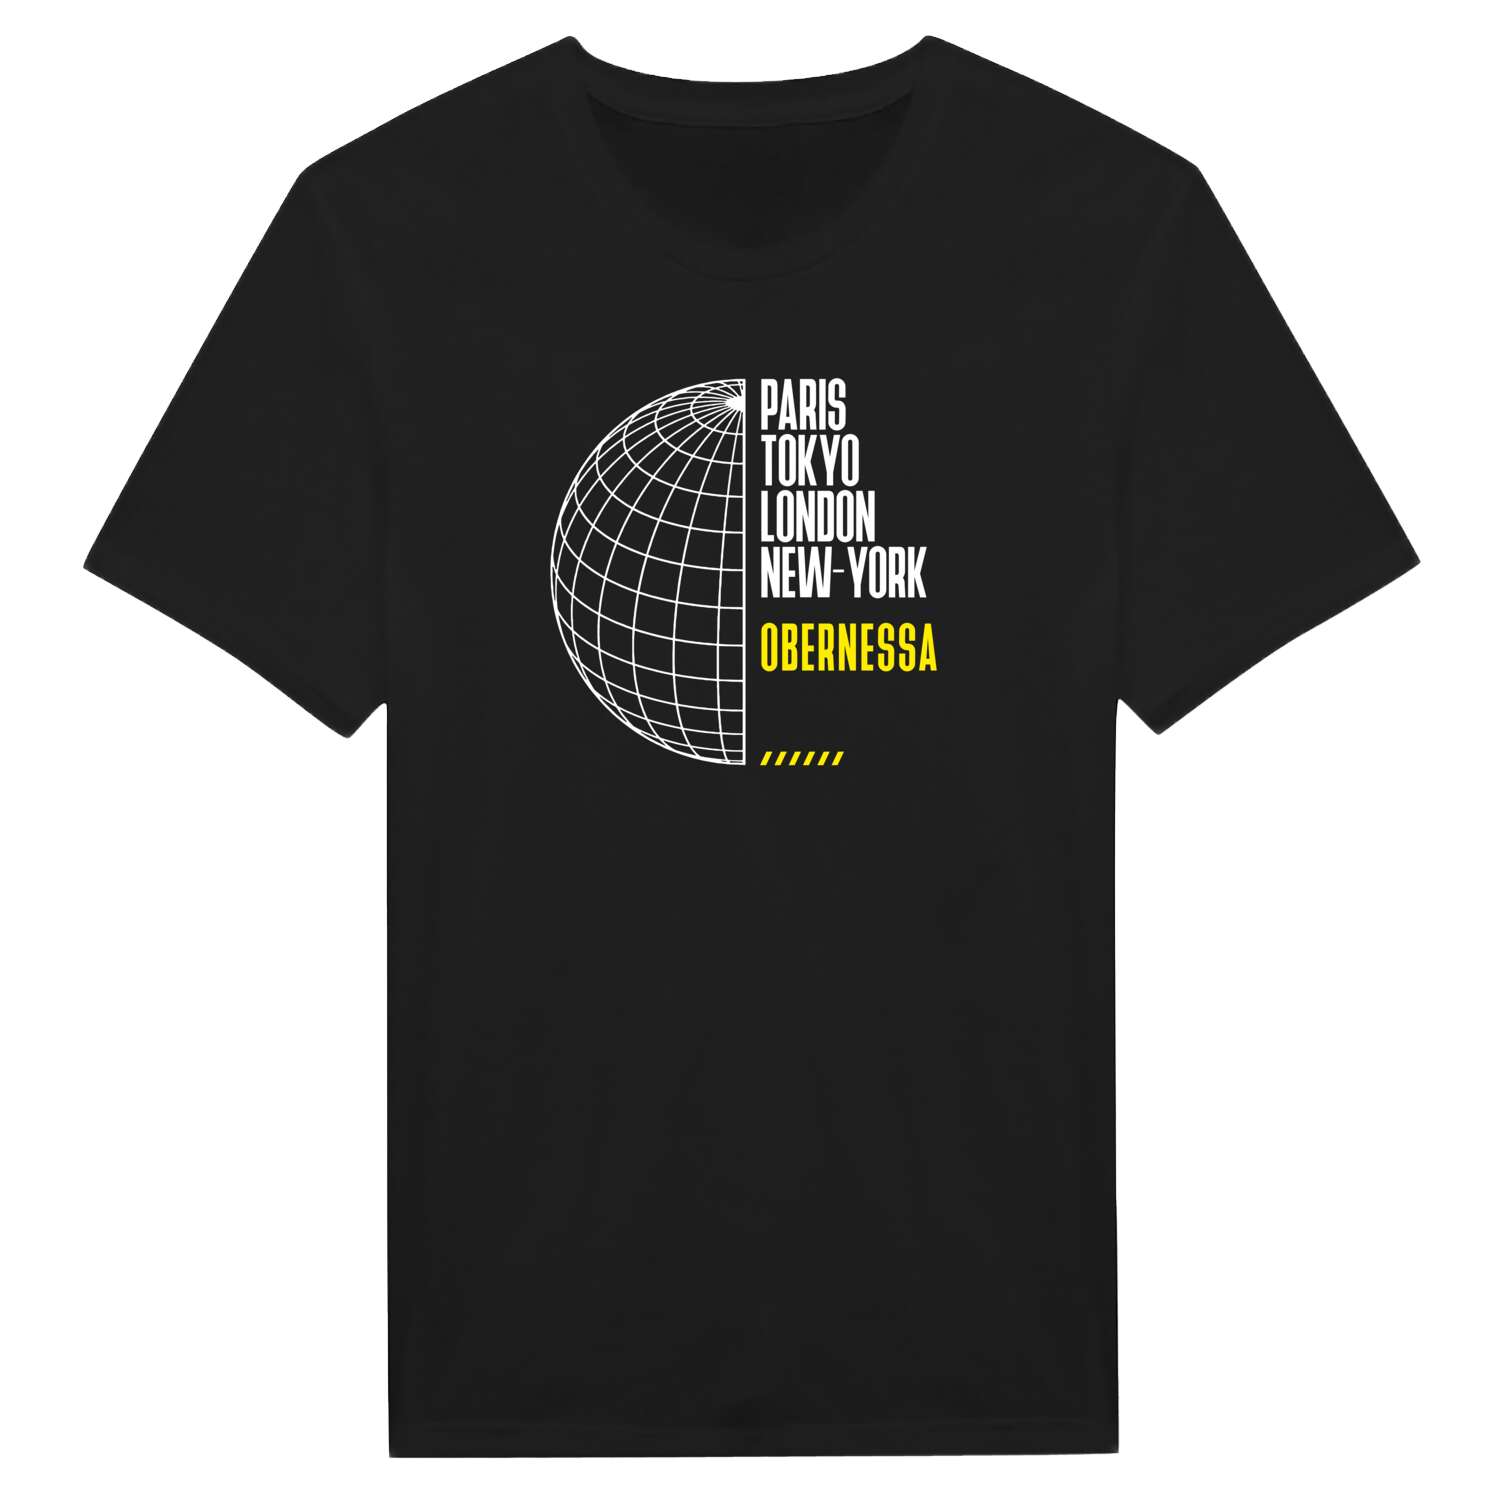 Obernessa T-Shirt »Paris Tokyo London«